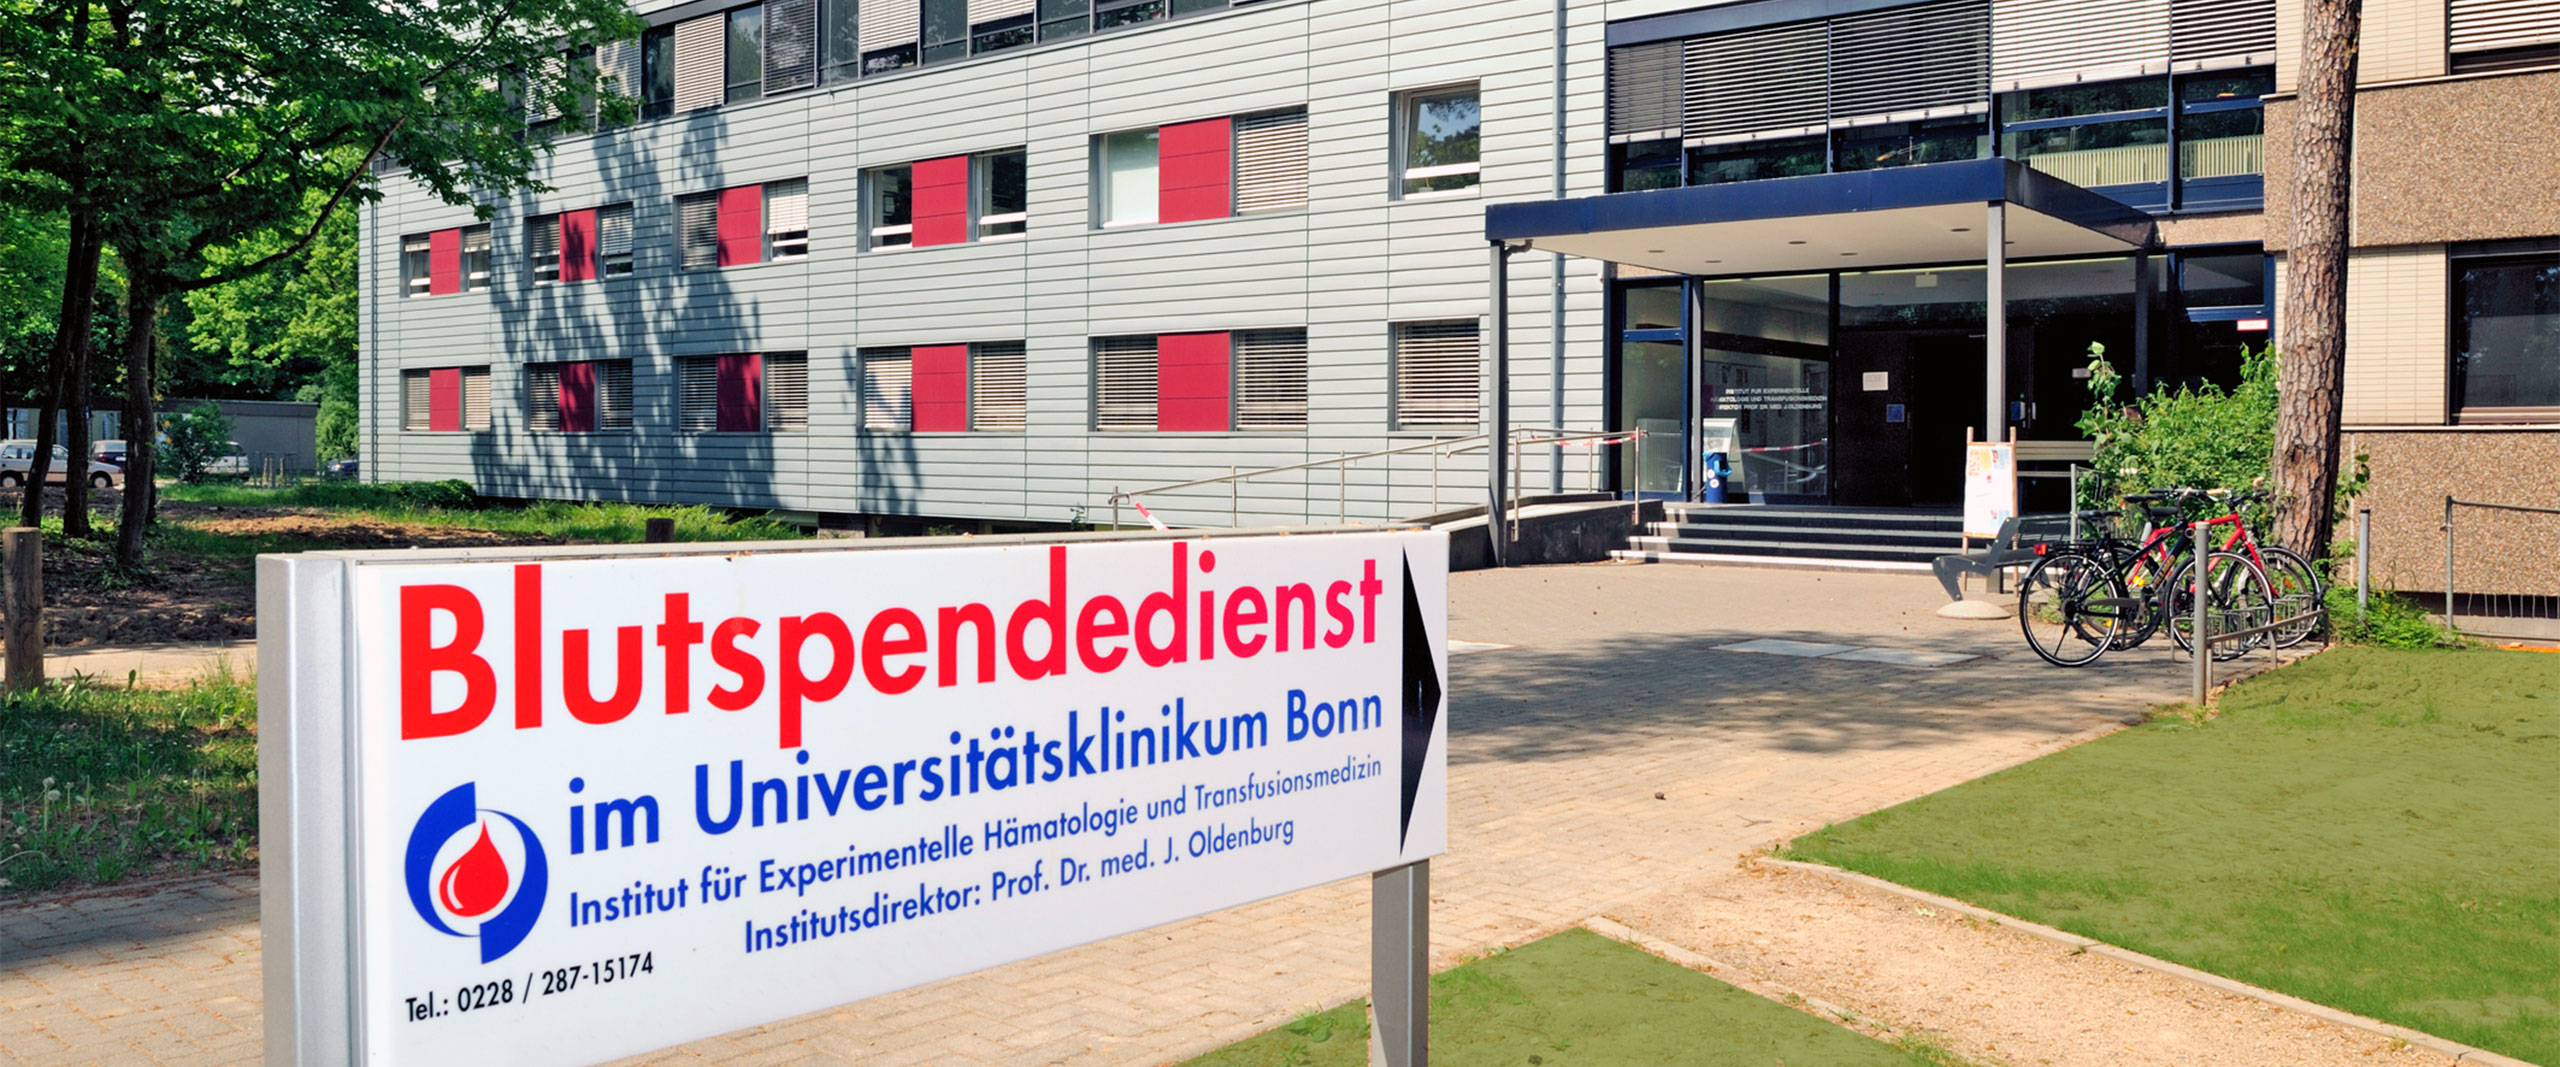 Blutspendedienst am Universitätsklinikum Bonn